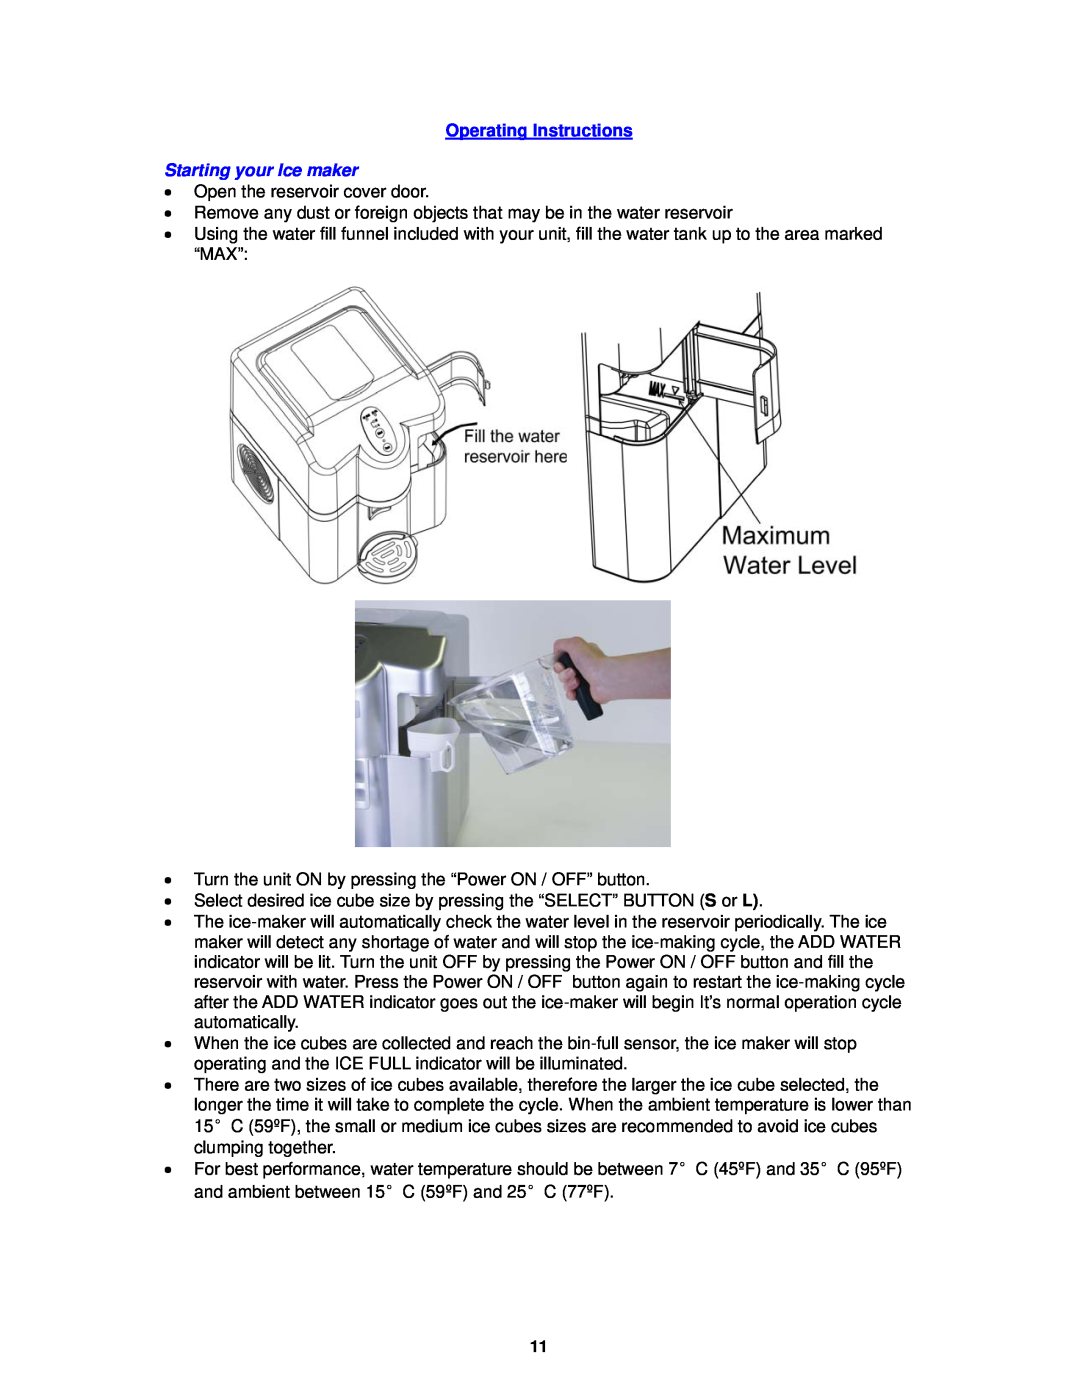 Avanti IMD250 instruction manual Operating Instructions, Starting your Ice maker 